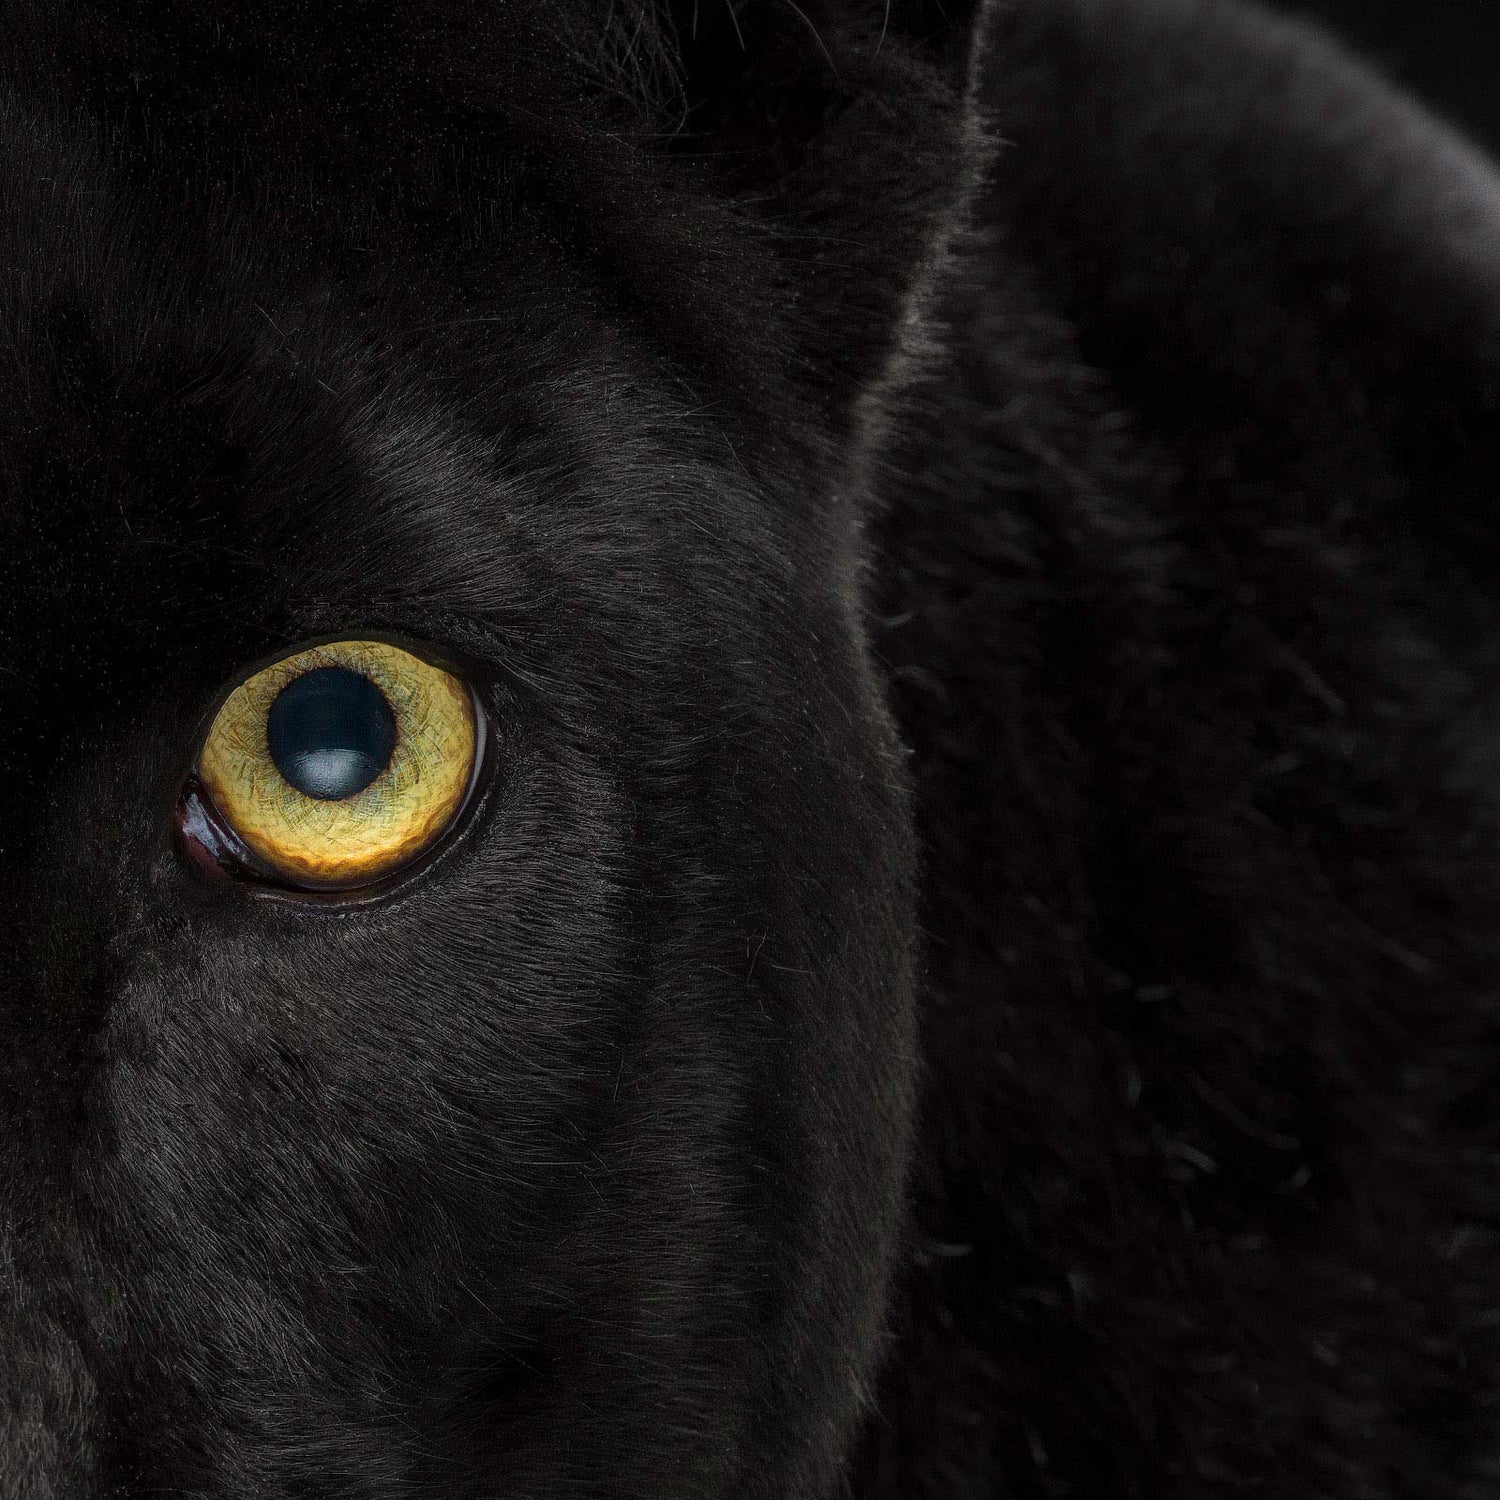 Close up photograph of a black panther's eye by animal photographer Tim Platt